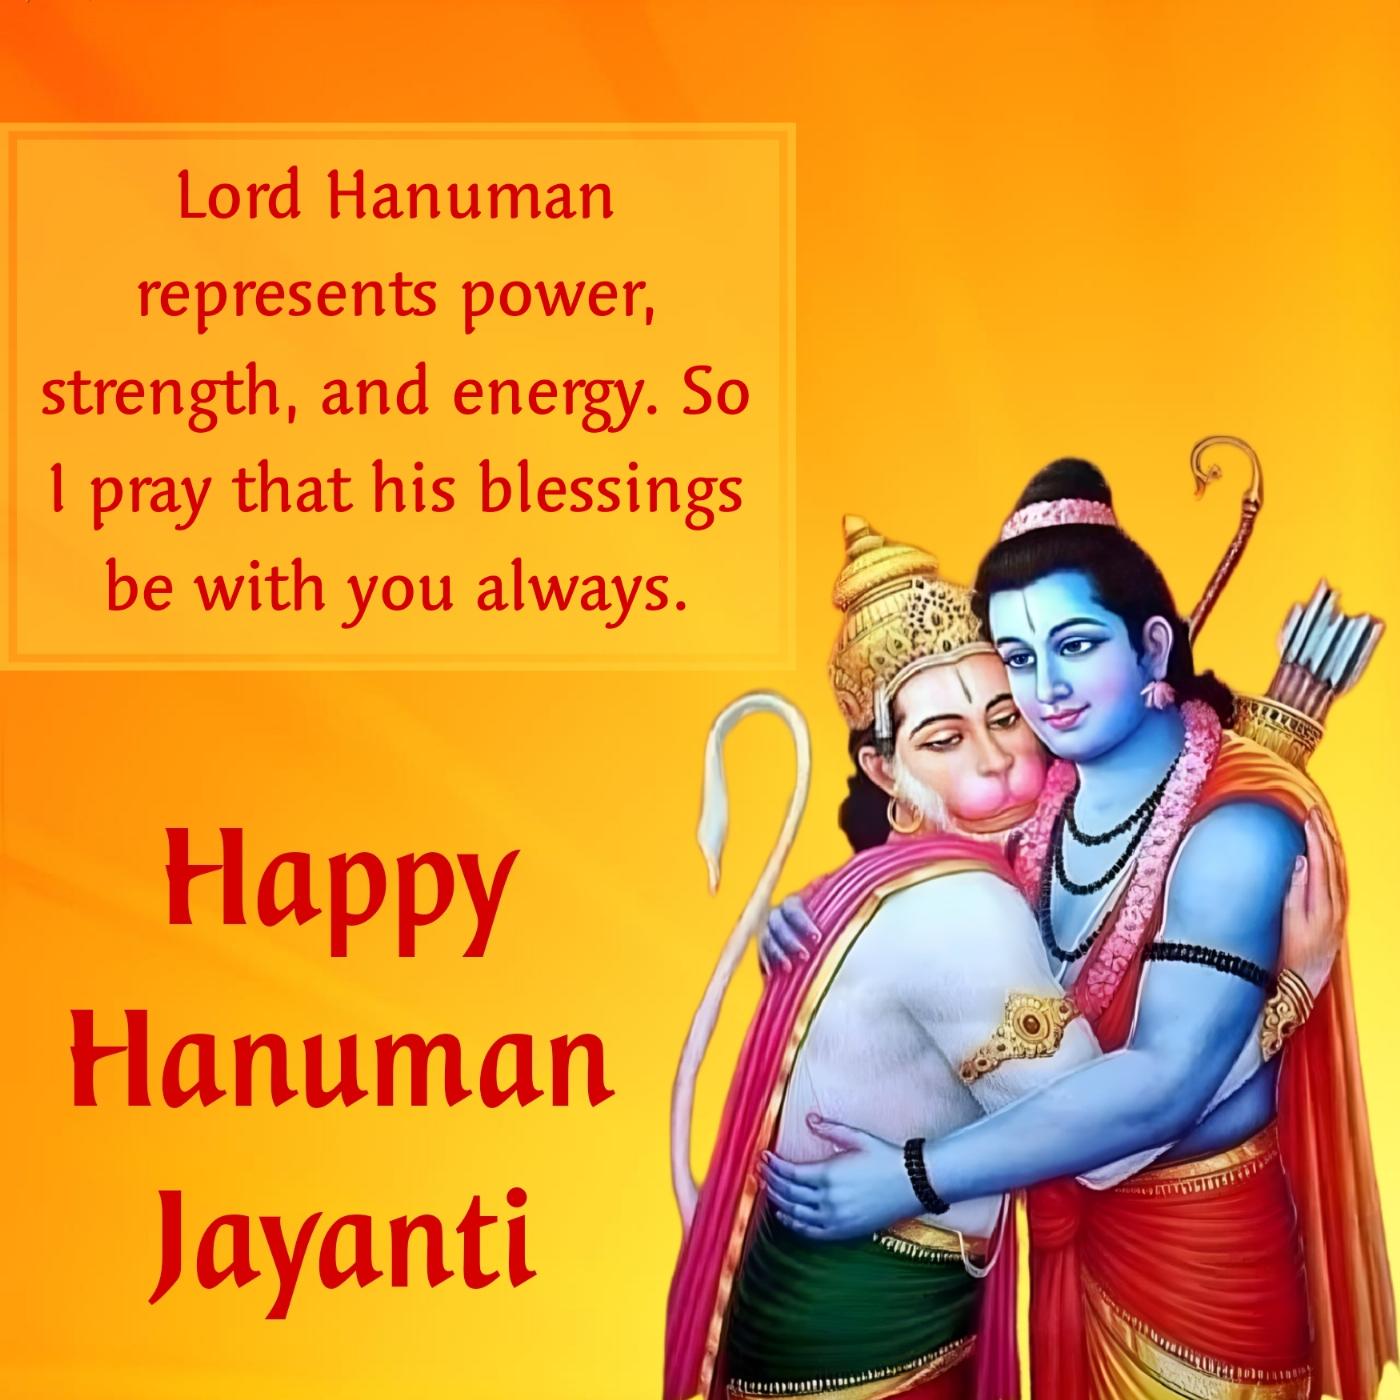 Lord Hanuman represents power strength and energy